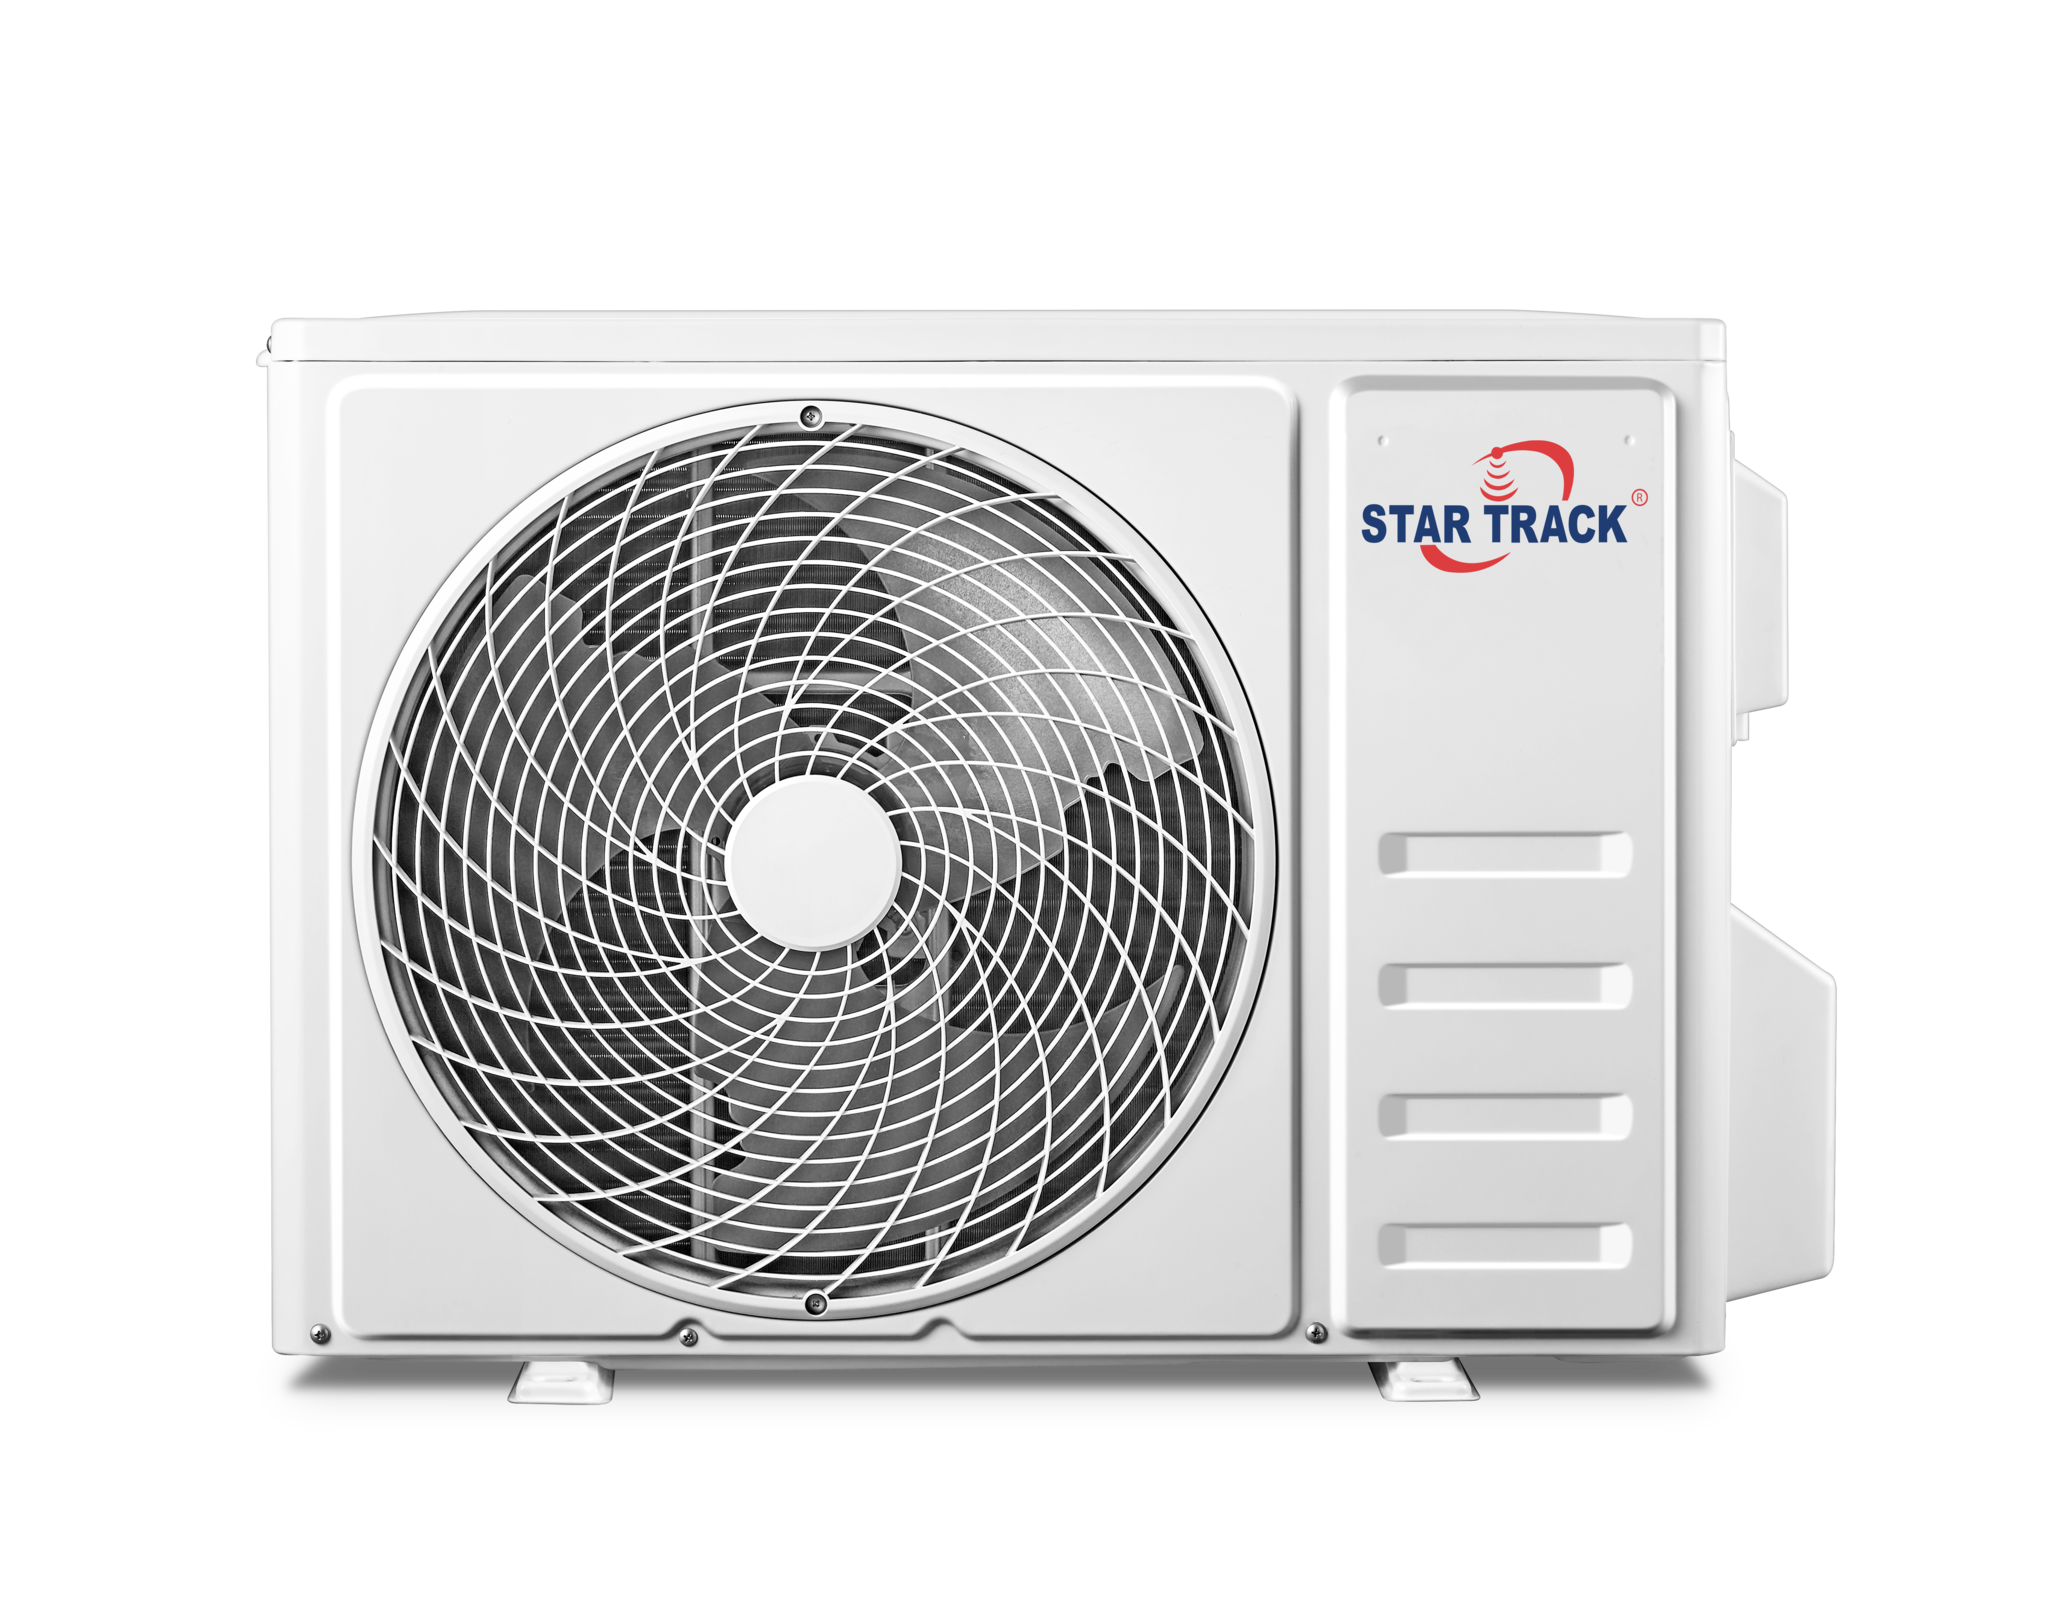 Star Track Split Air Conditioner, R410A Gas BTU, T3 Rotary Compressor Auto Restart, White, 5 Year Warranty of the Compressor